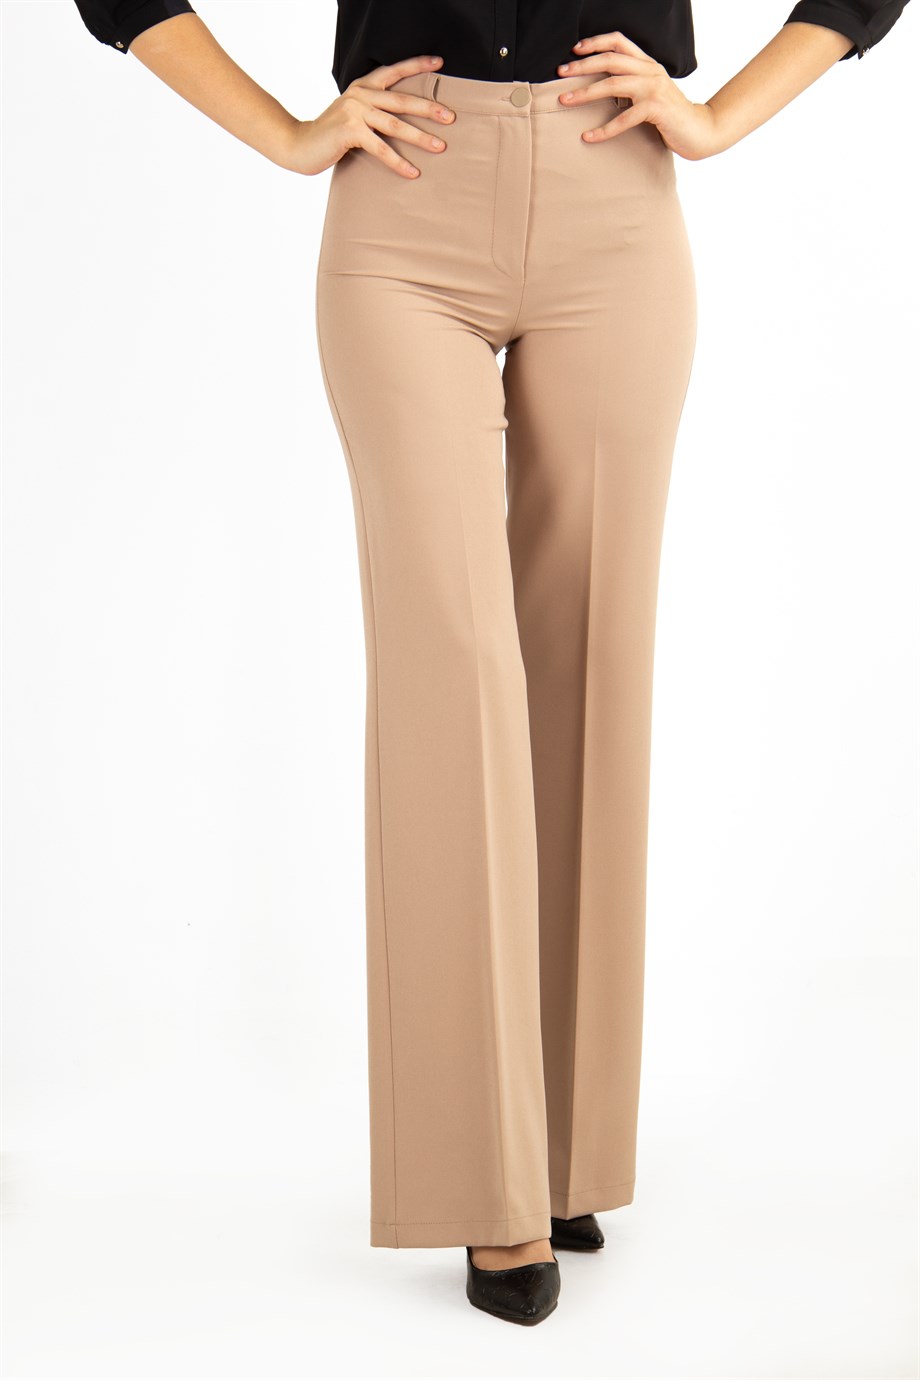 LIBAS Women Beige Trousers - Buy LIBAS Women Beige Trousers Online at Best  Prices in India | Flipkart.com